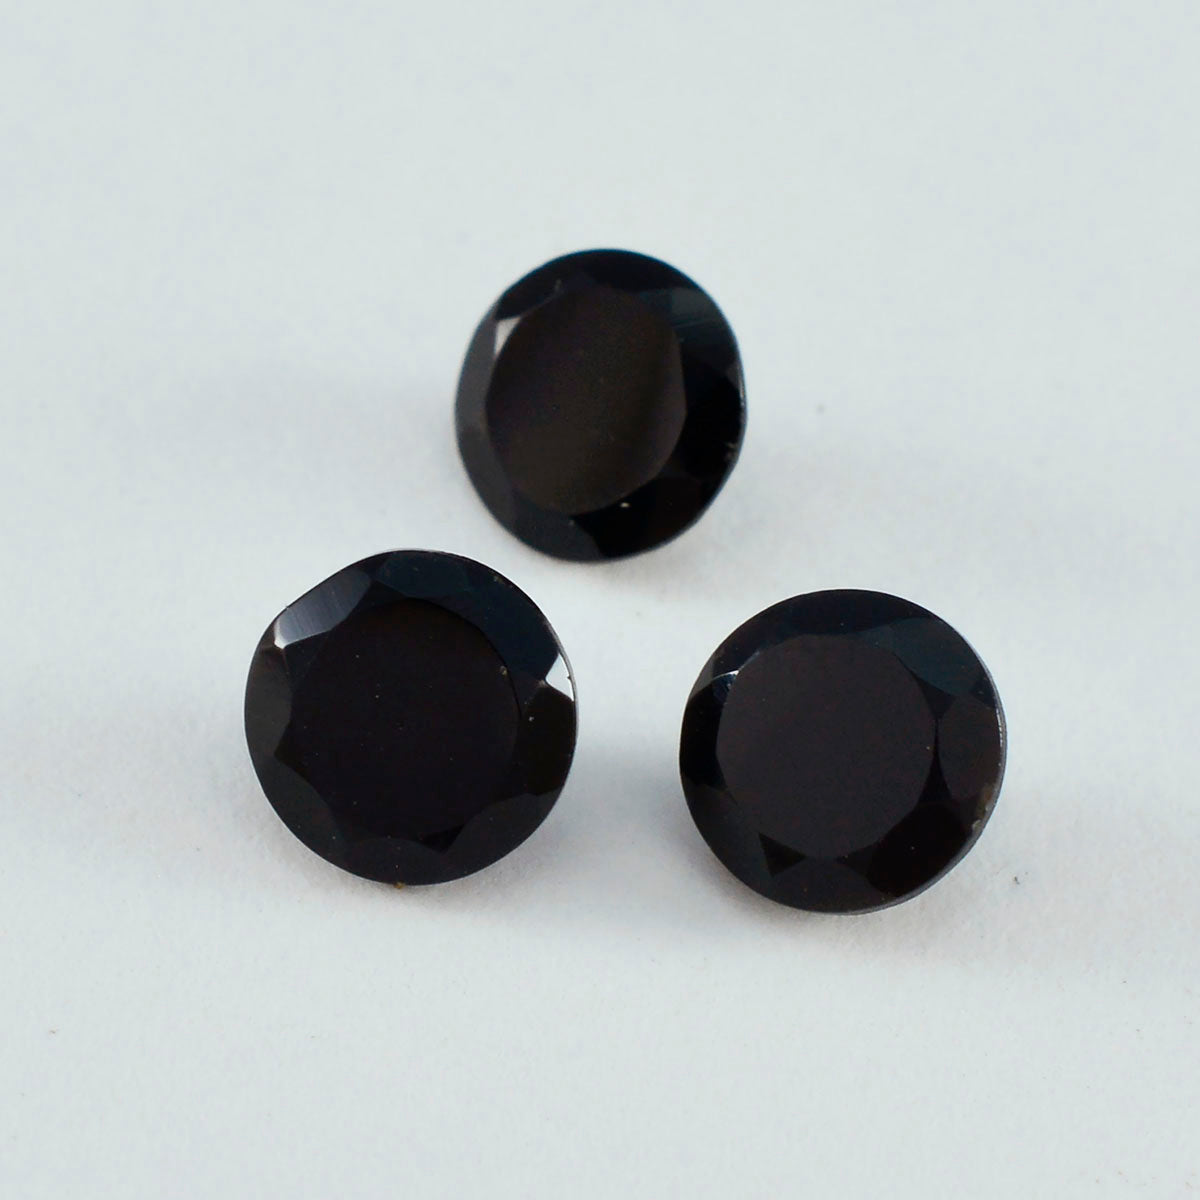 Riyogems 1PC Genuine Black Onyx Faceted 9x9 mm Round Shape nice-looking Quality Loose Gem